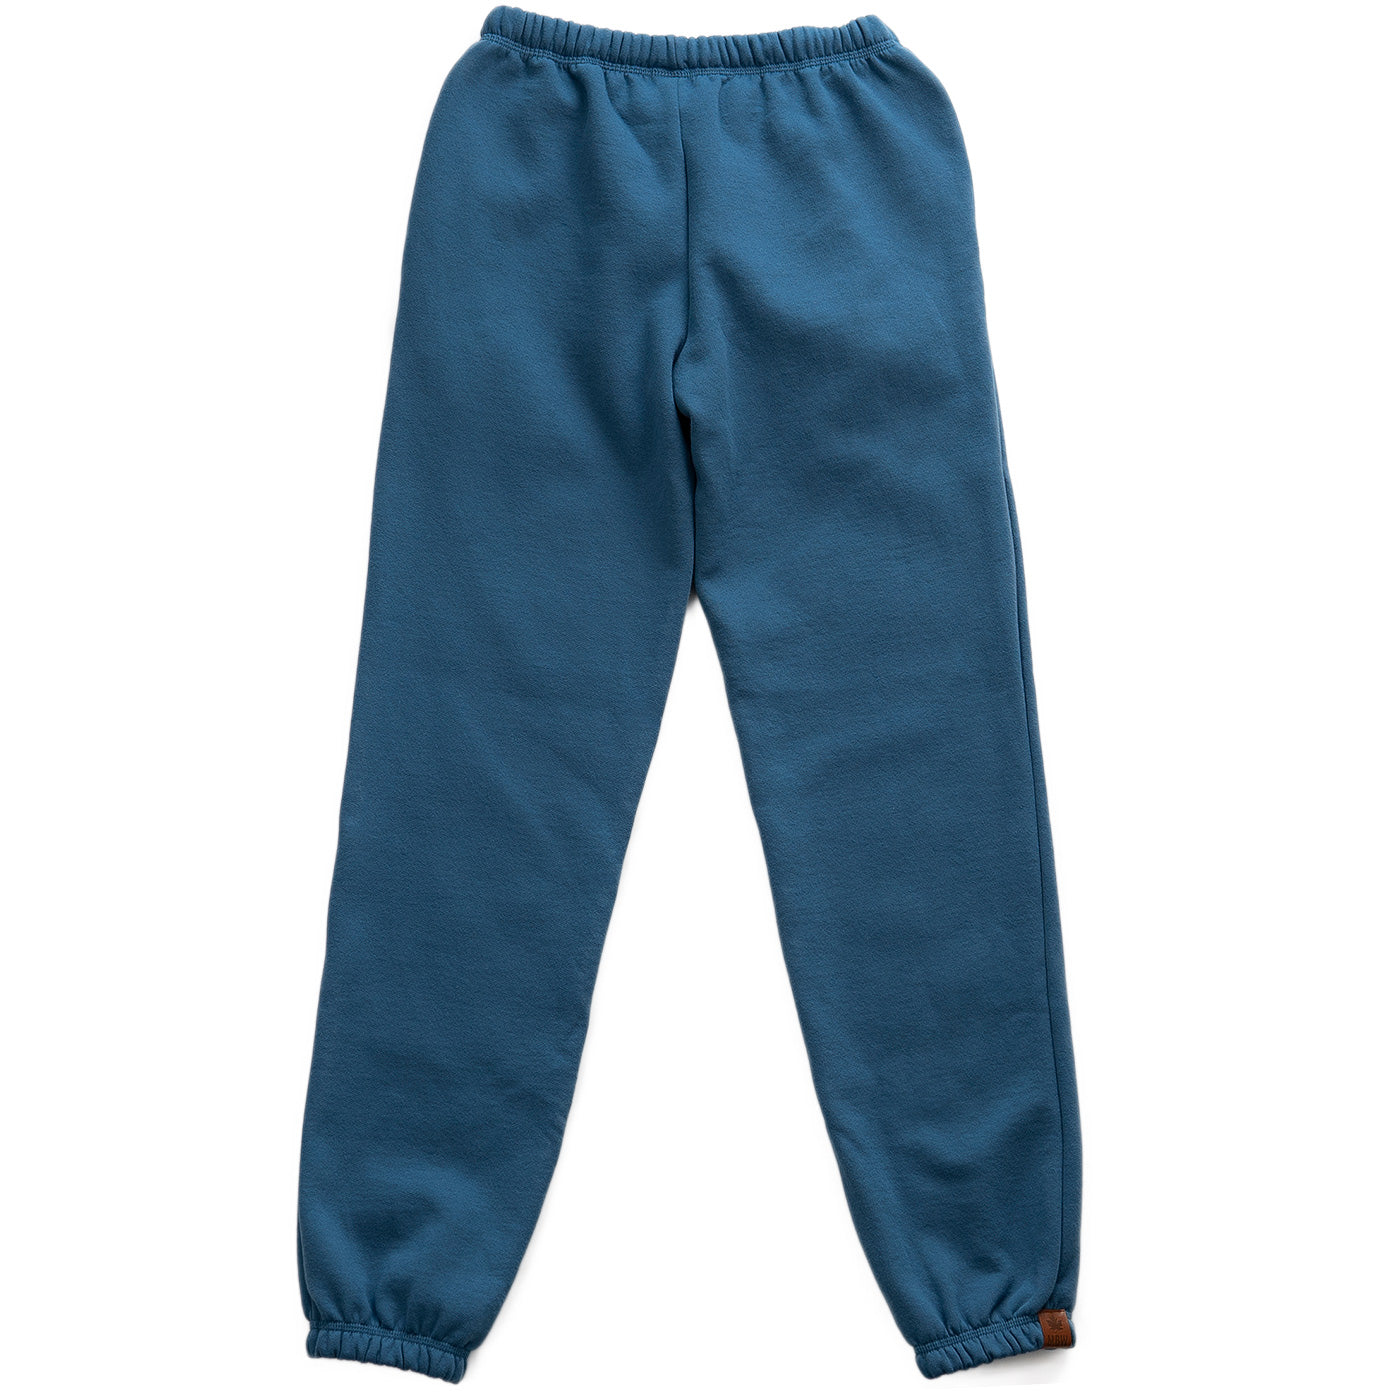 Muskoka Bear Wear – MBW Camp Pants